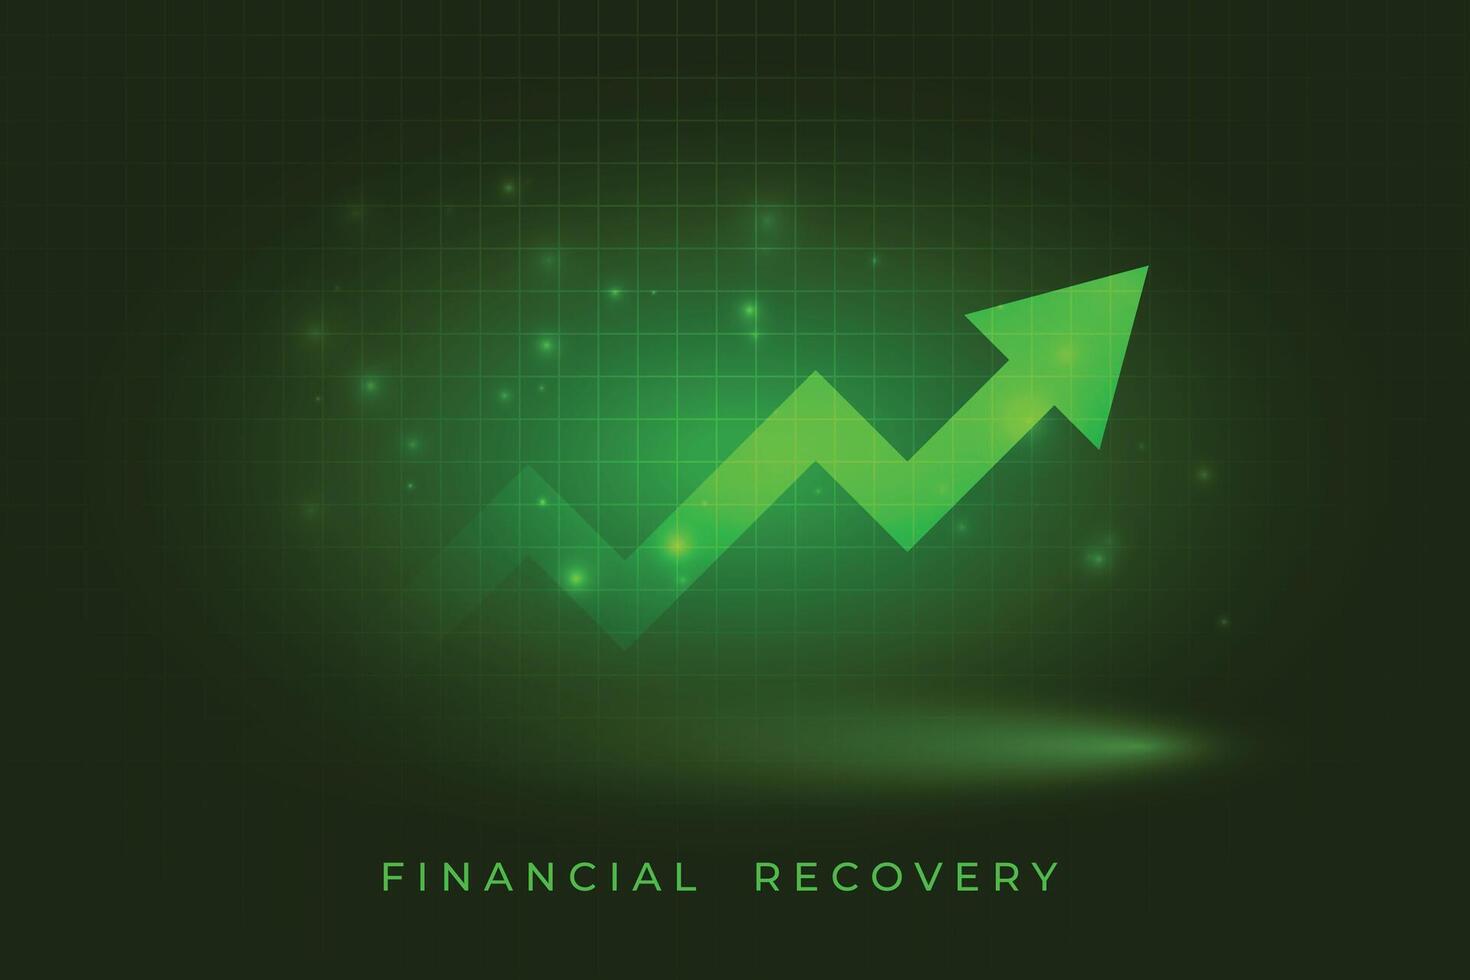 finance stock market upward green arrow growth background vector